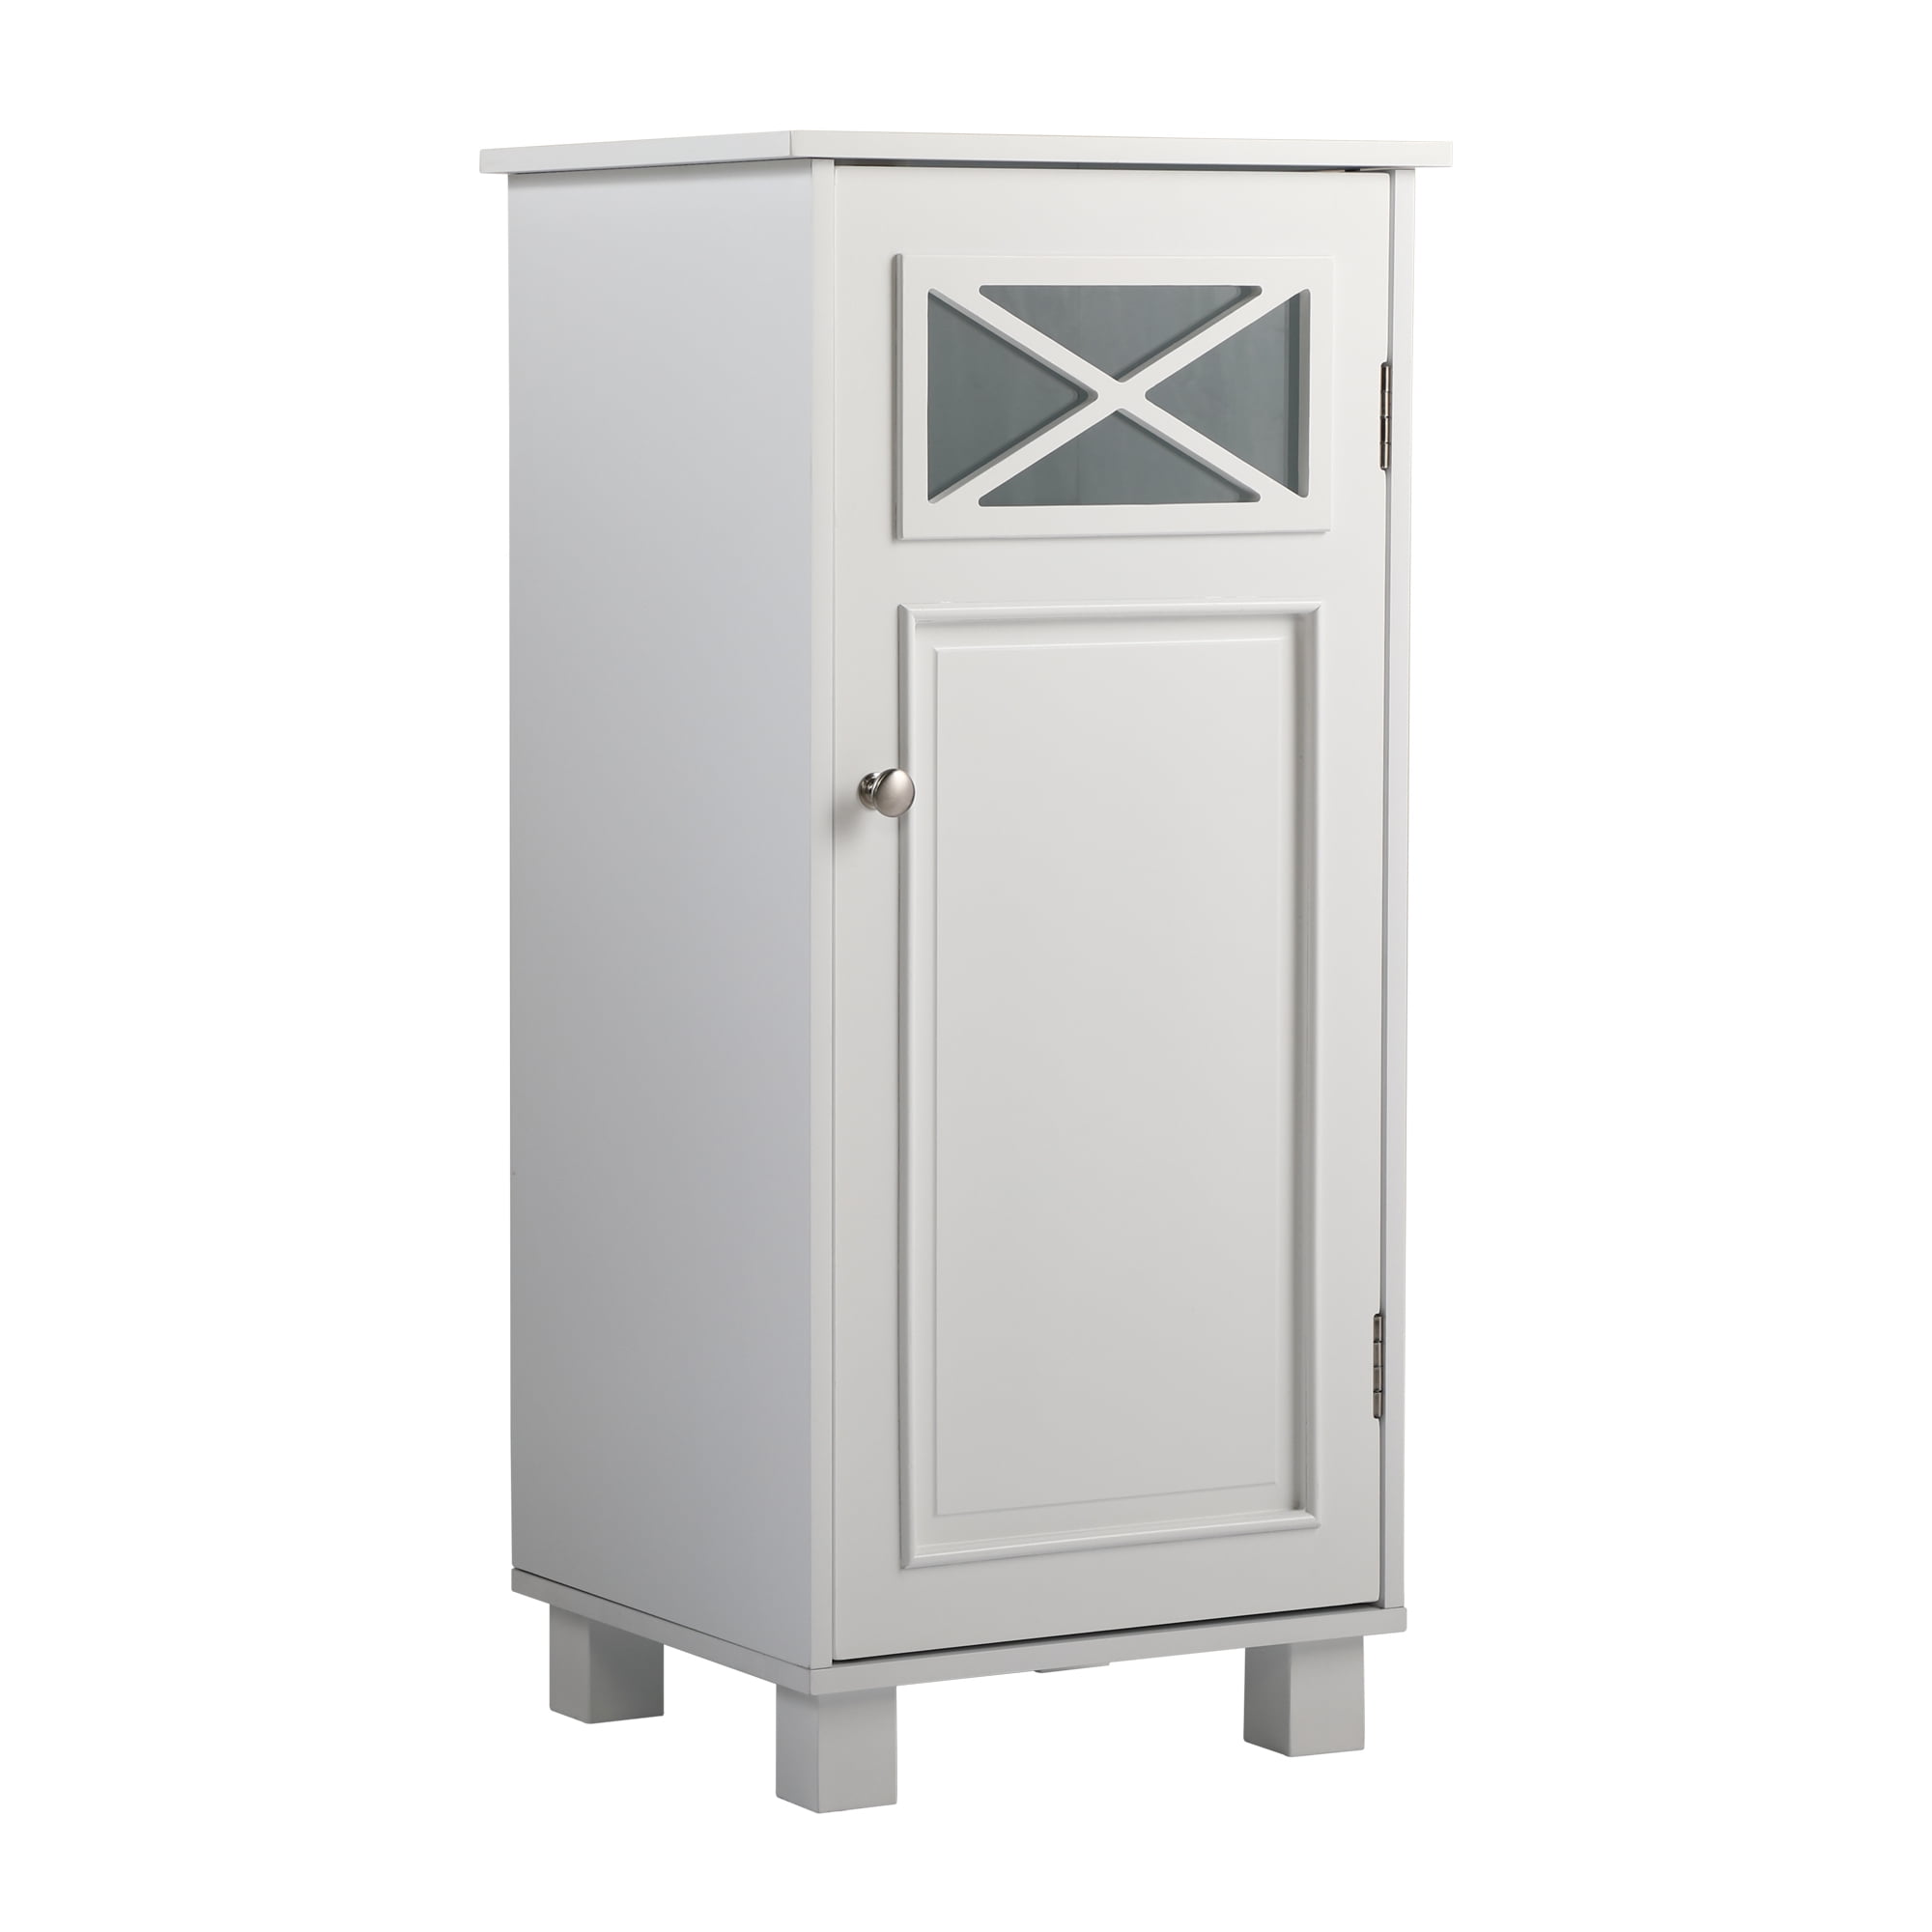 Standing Tall Storage Cabinet Wooden Bathroom Cupboard w/ Adjustable Shelves